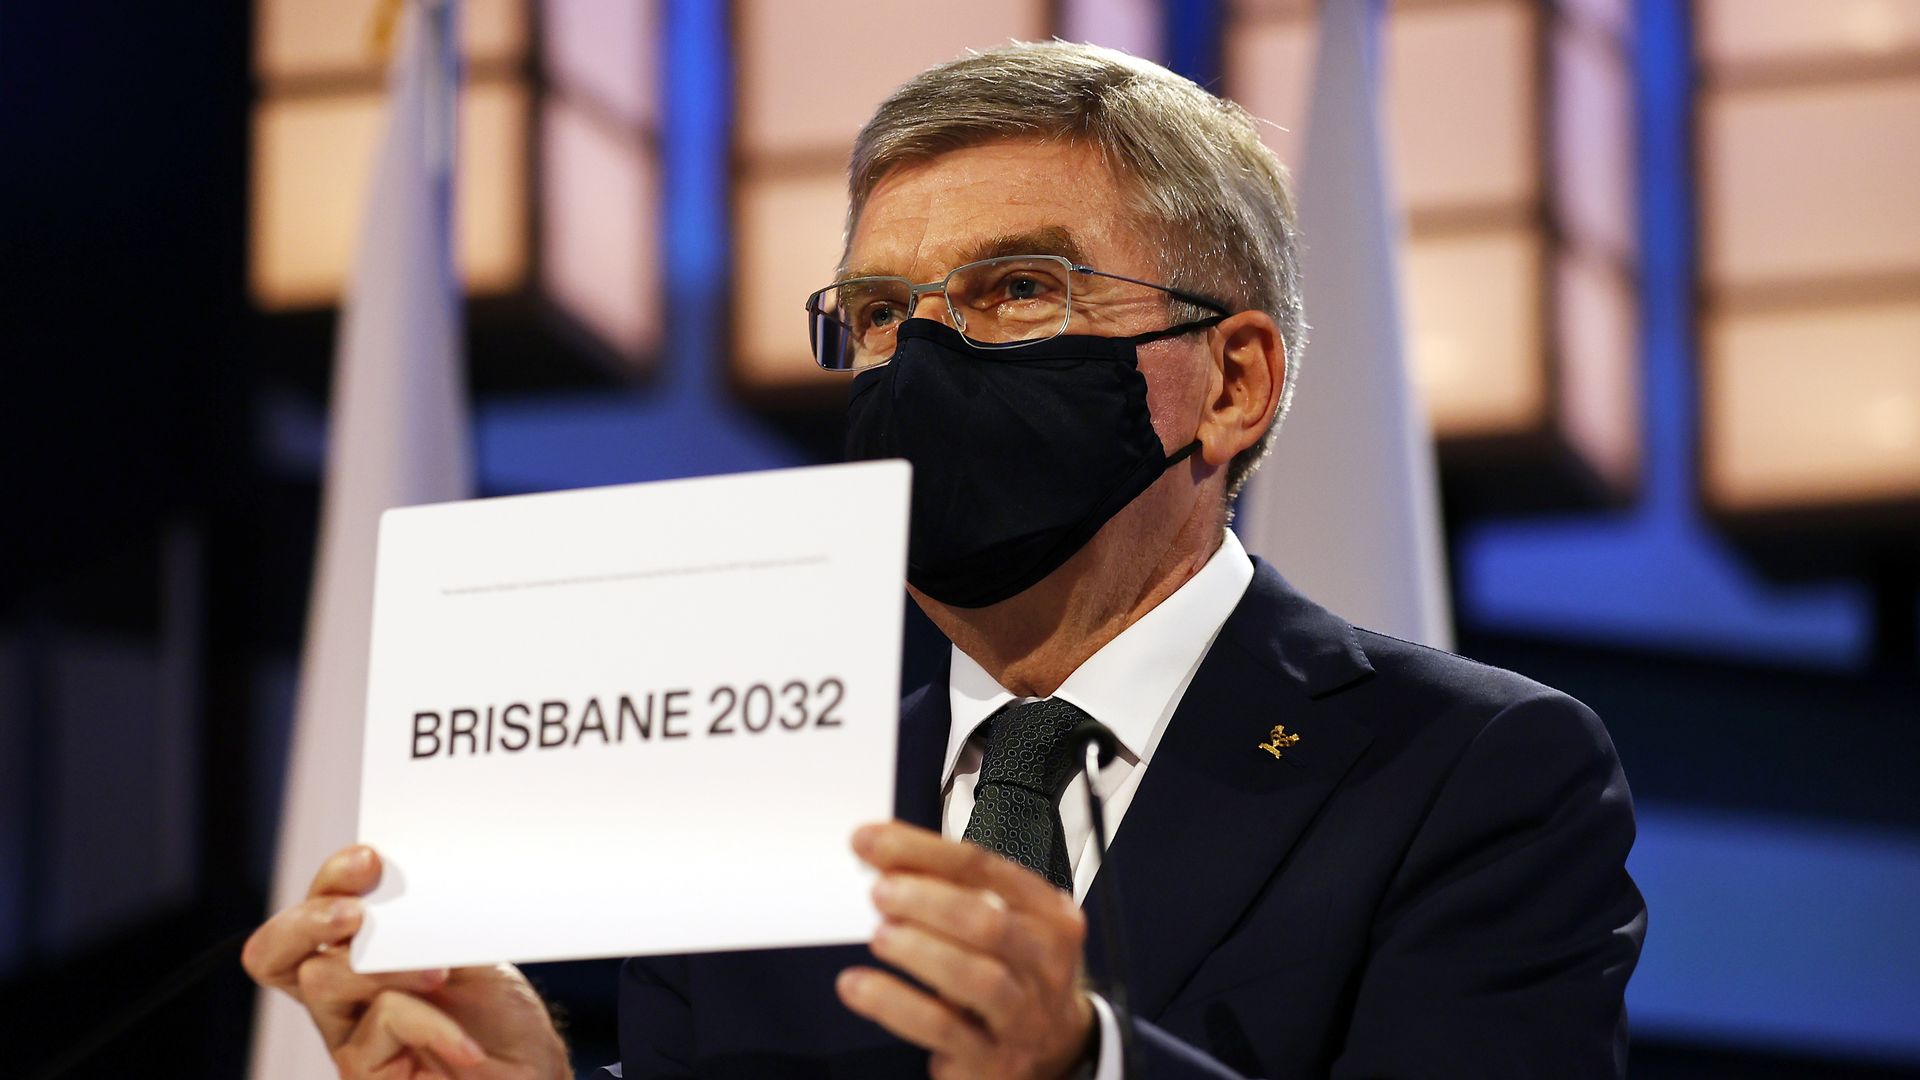 Thomas Bach holding Brisbane 2032 sign